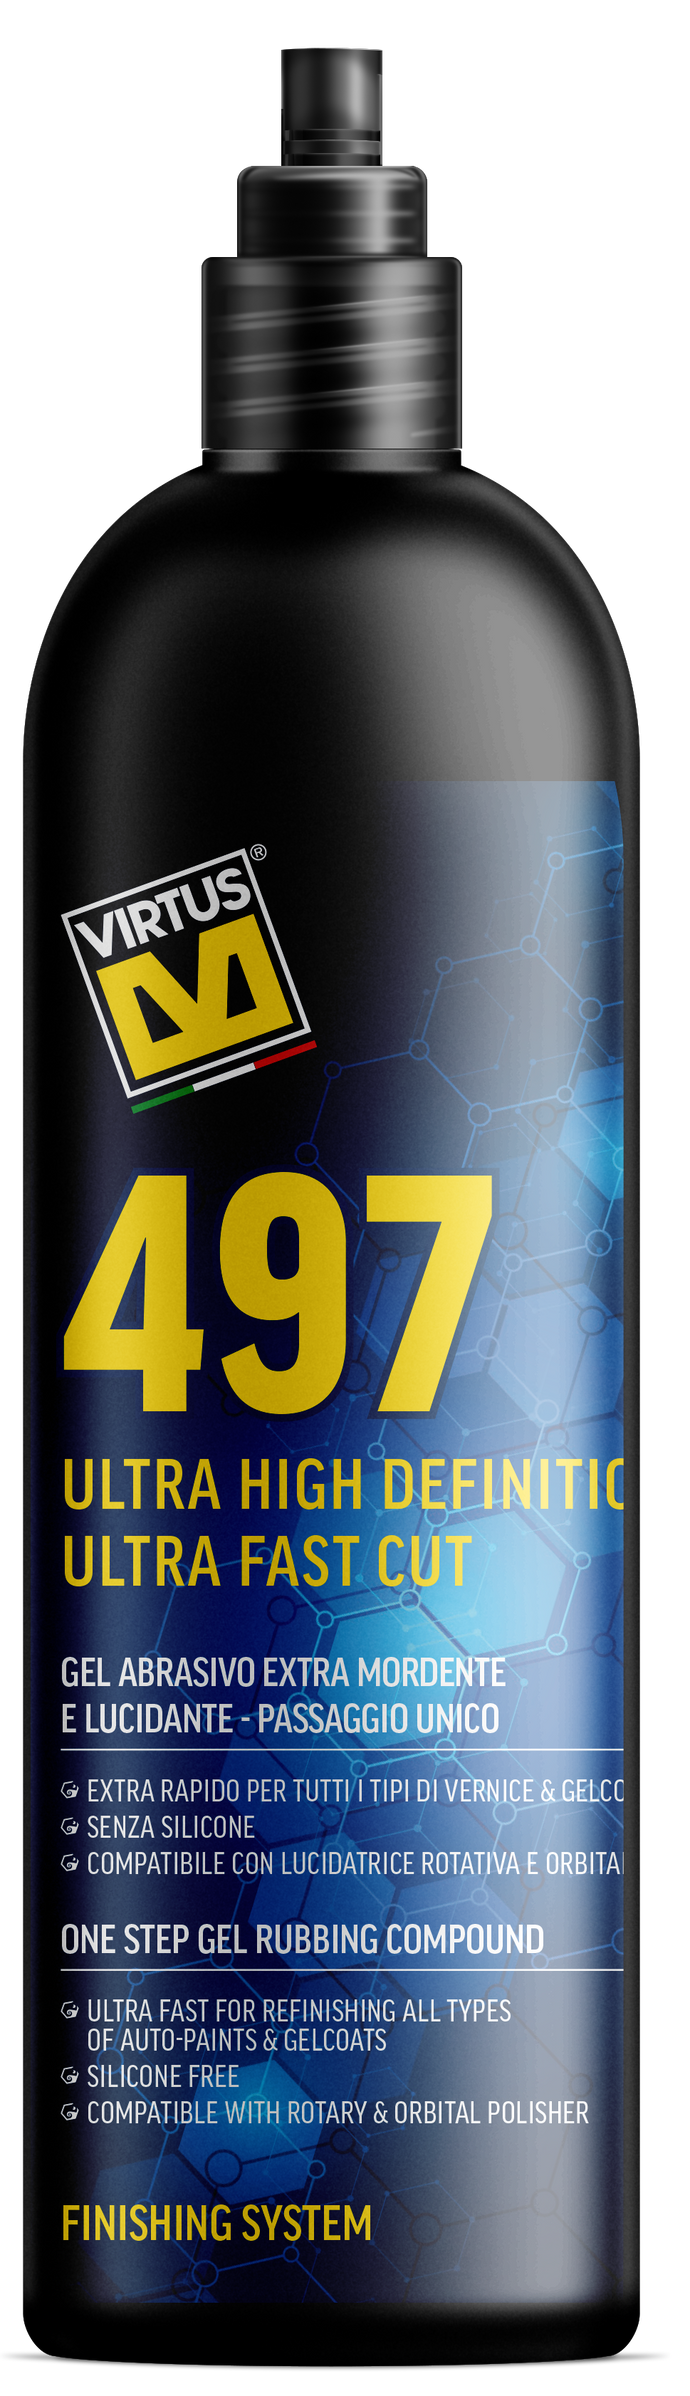 Virtus 497 Ultra Fast Cut Rubbing Compound